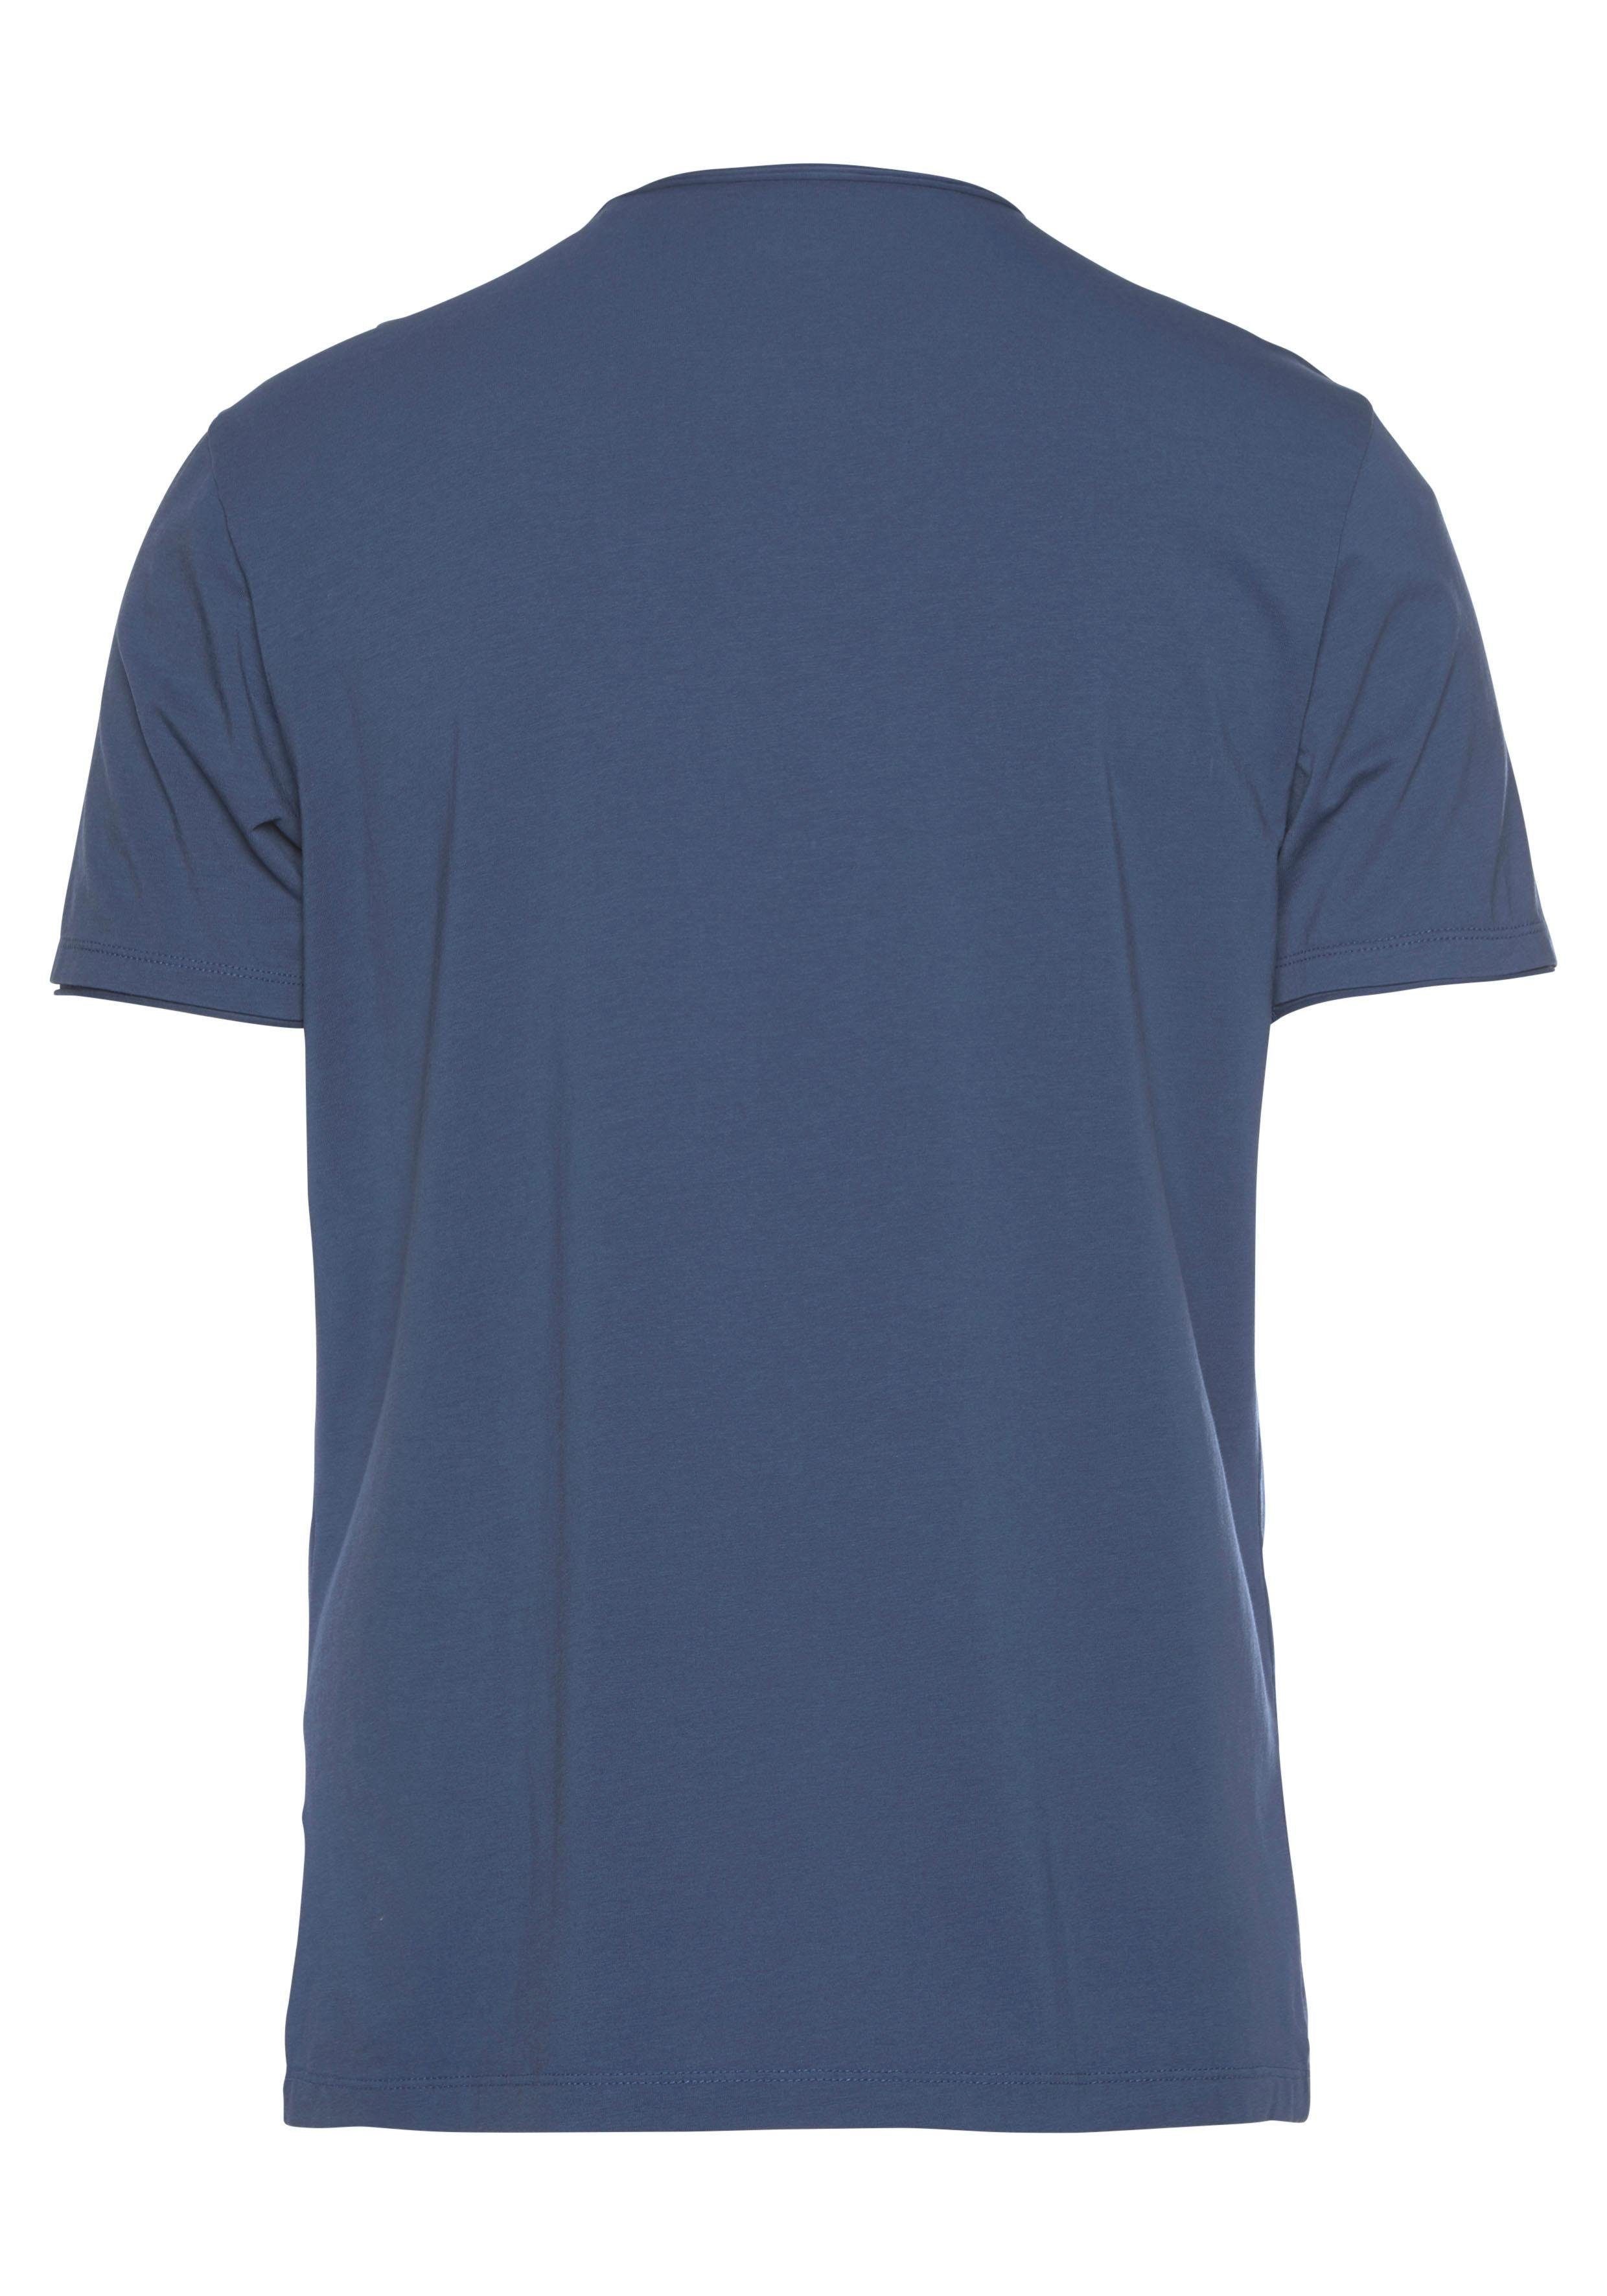 OLYMP T-Shirt Jersey indigo Five feinem body aus fit Level